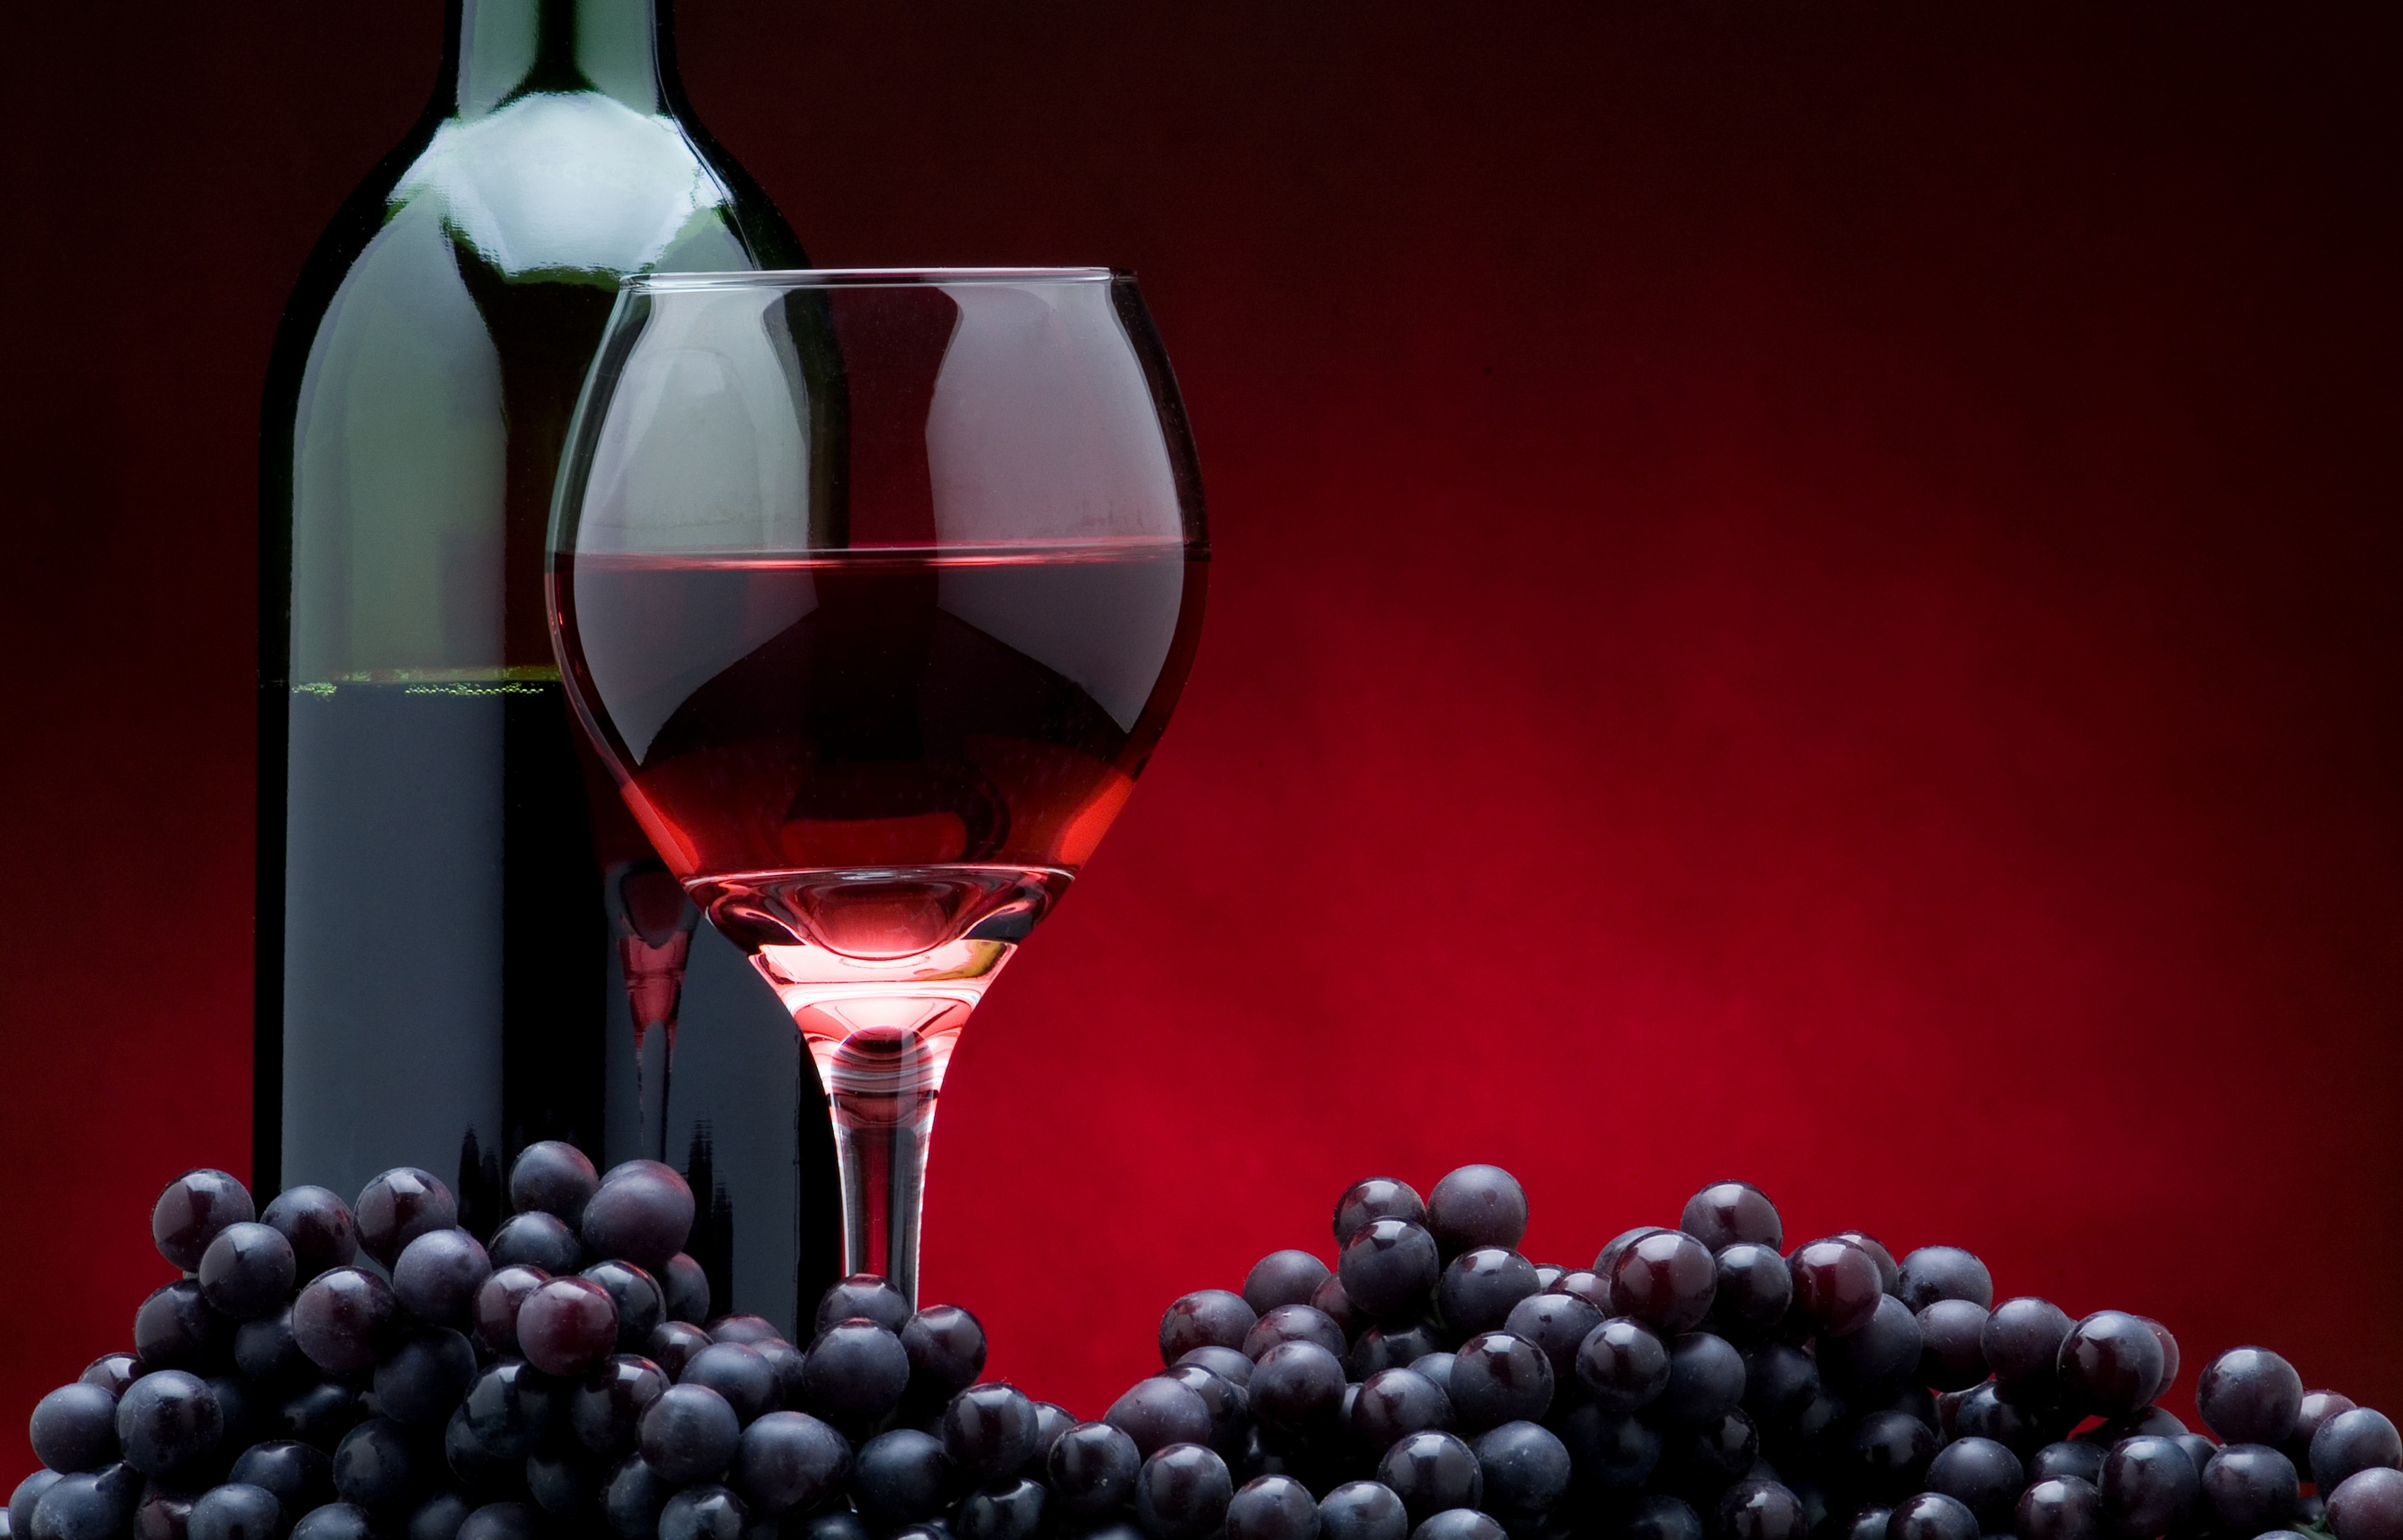 Вторая половина вина. Красное вино. Бокал с вином. Виноградные вина. Вино и виноград.